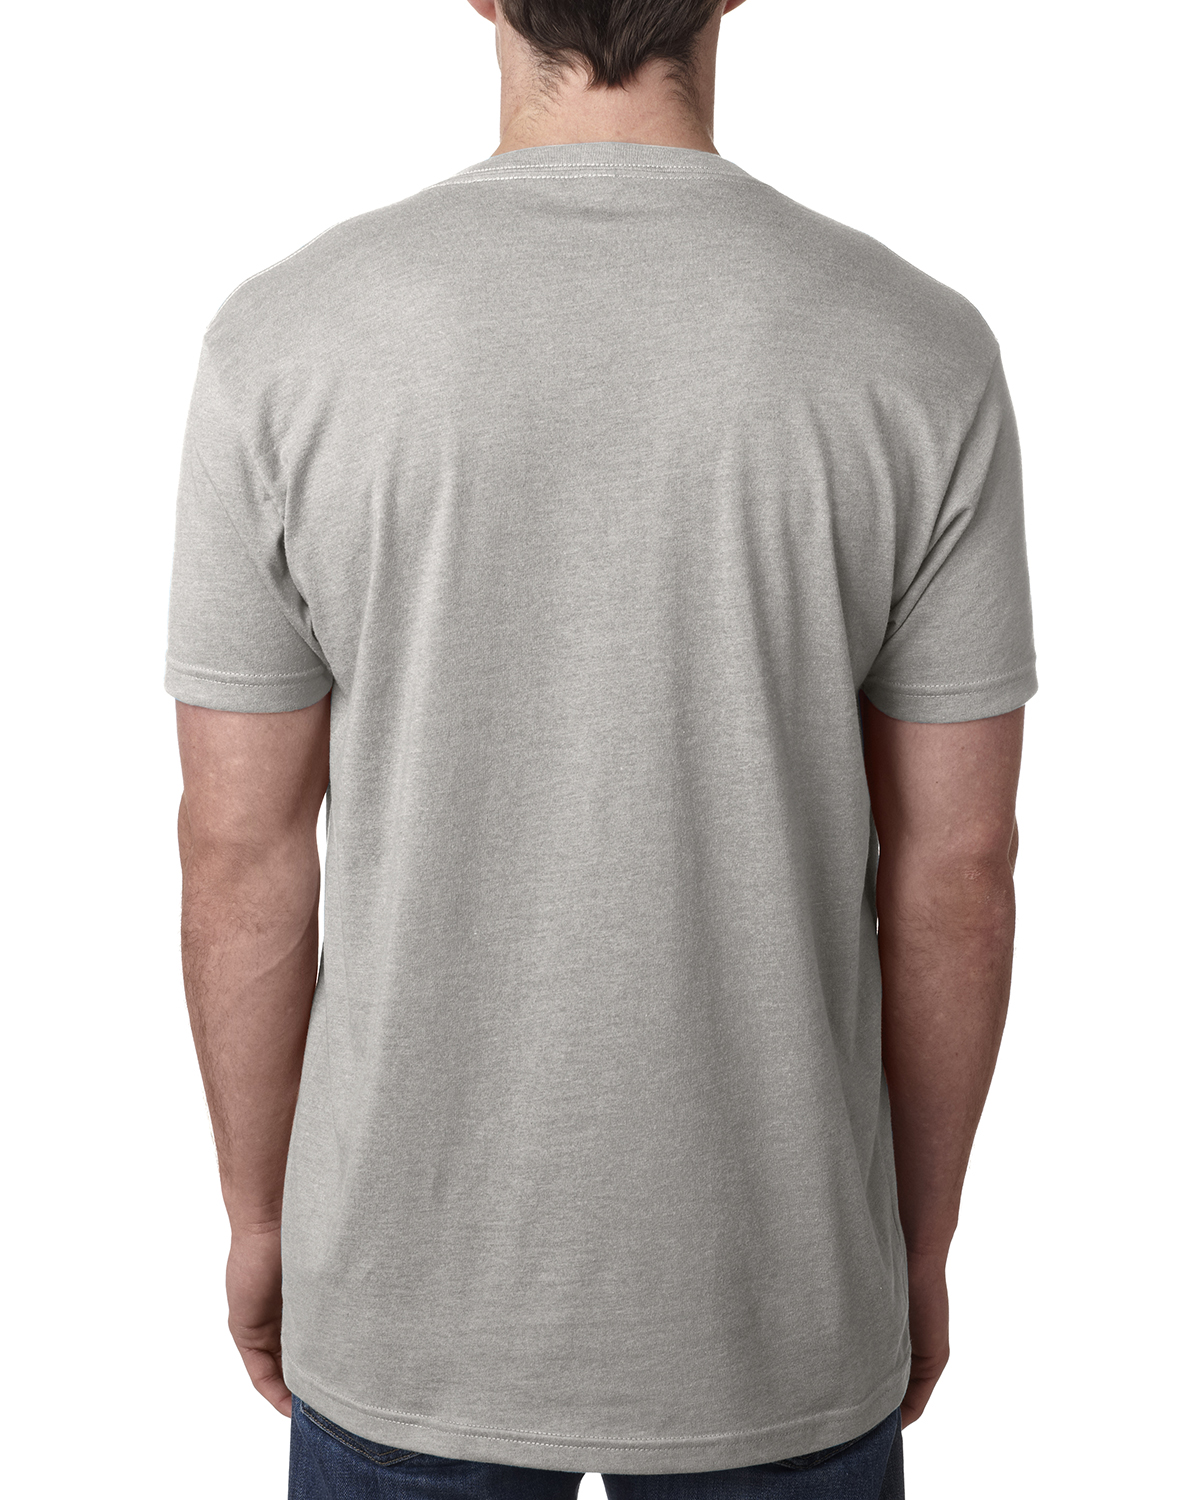 Next Level Men's Premium CVC V-Neck Soft S-XL T-Shirt R-6240 | eBay